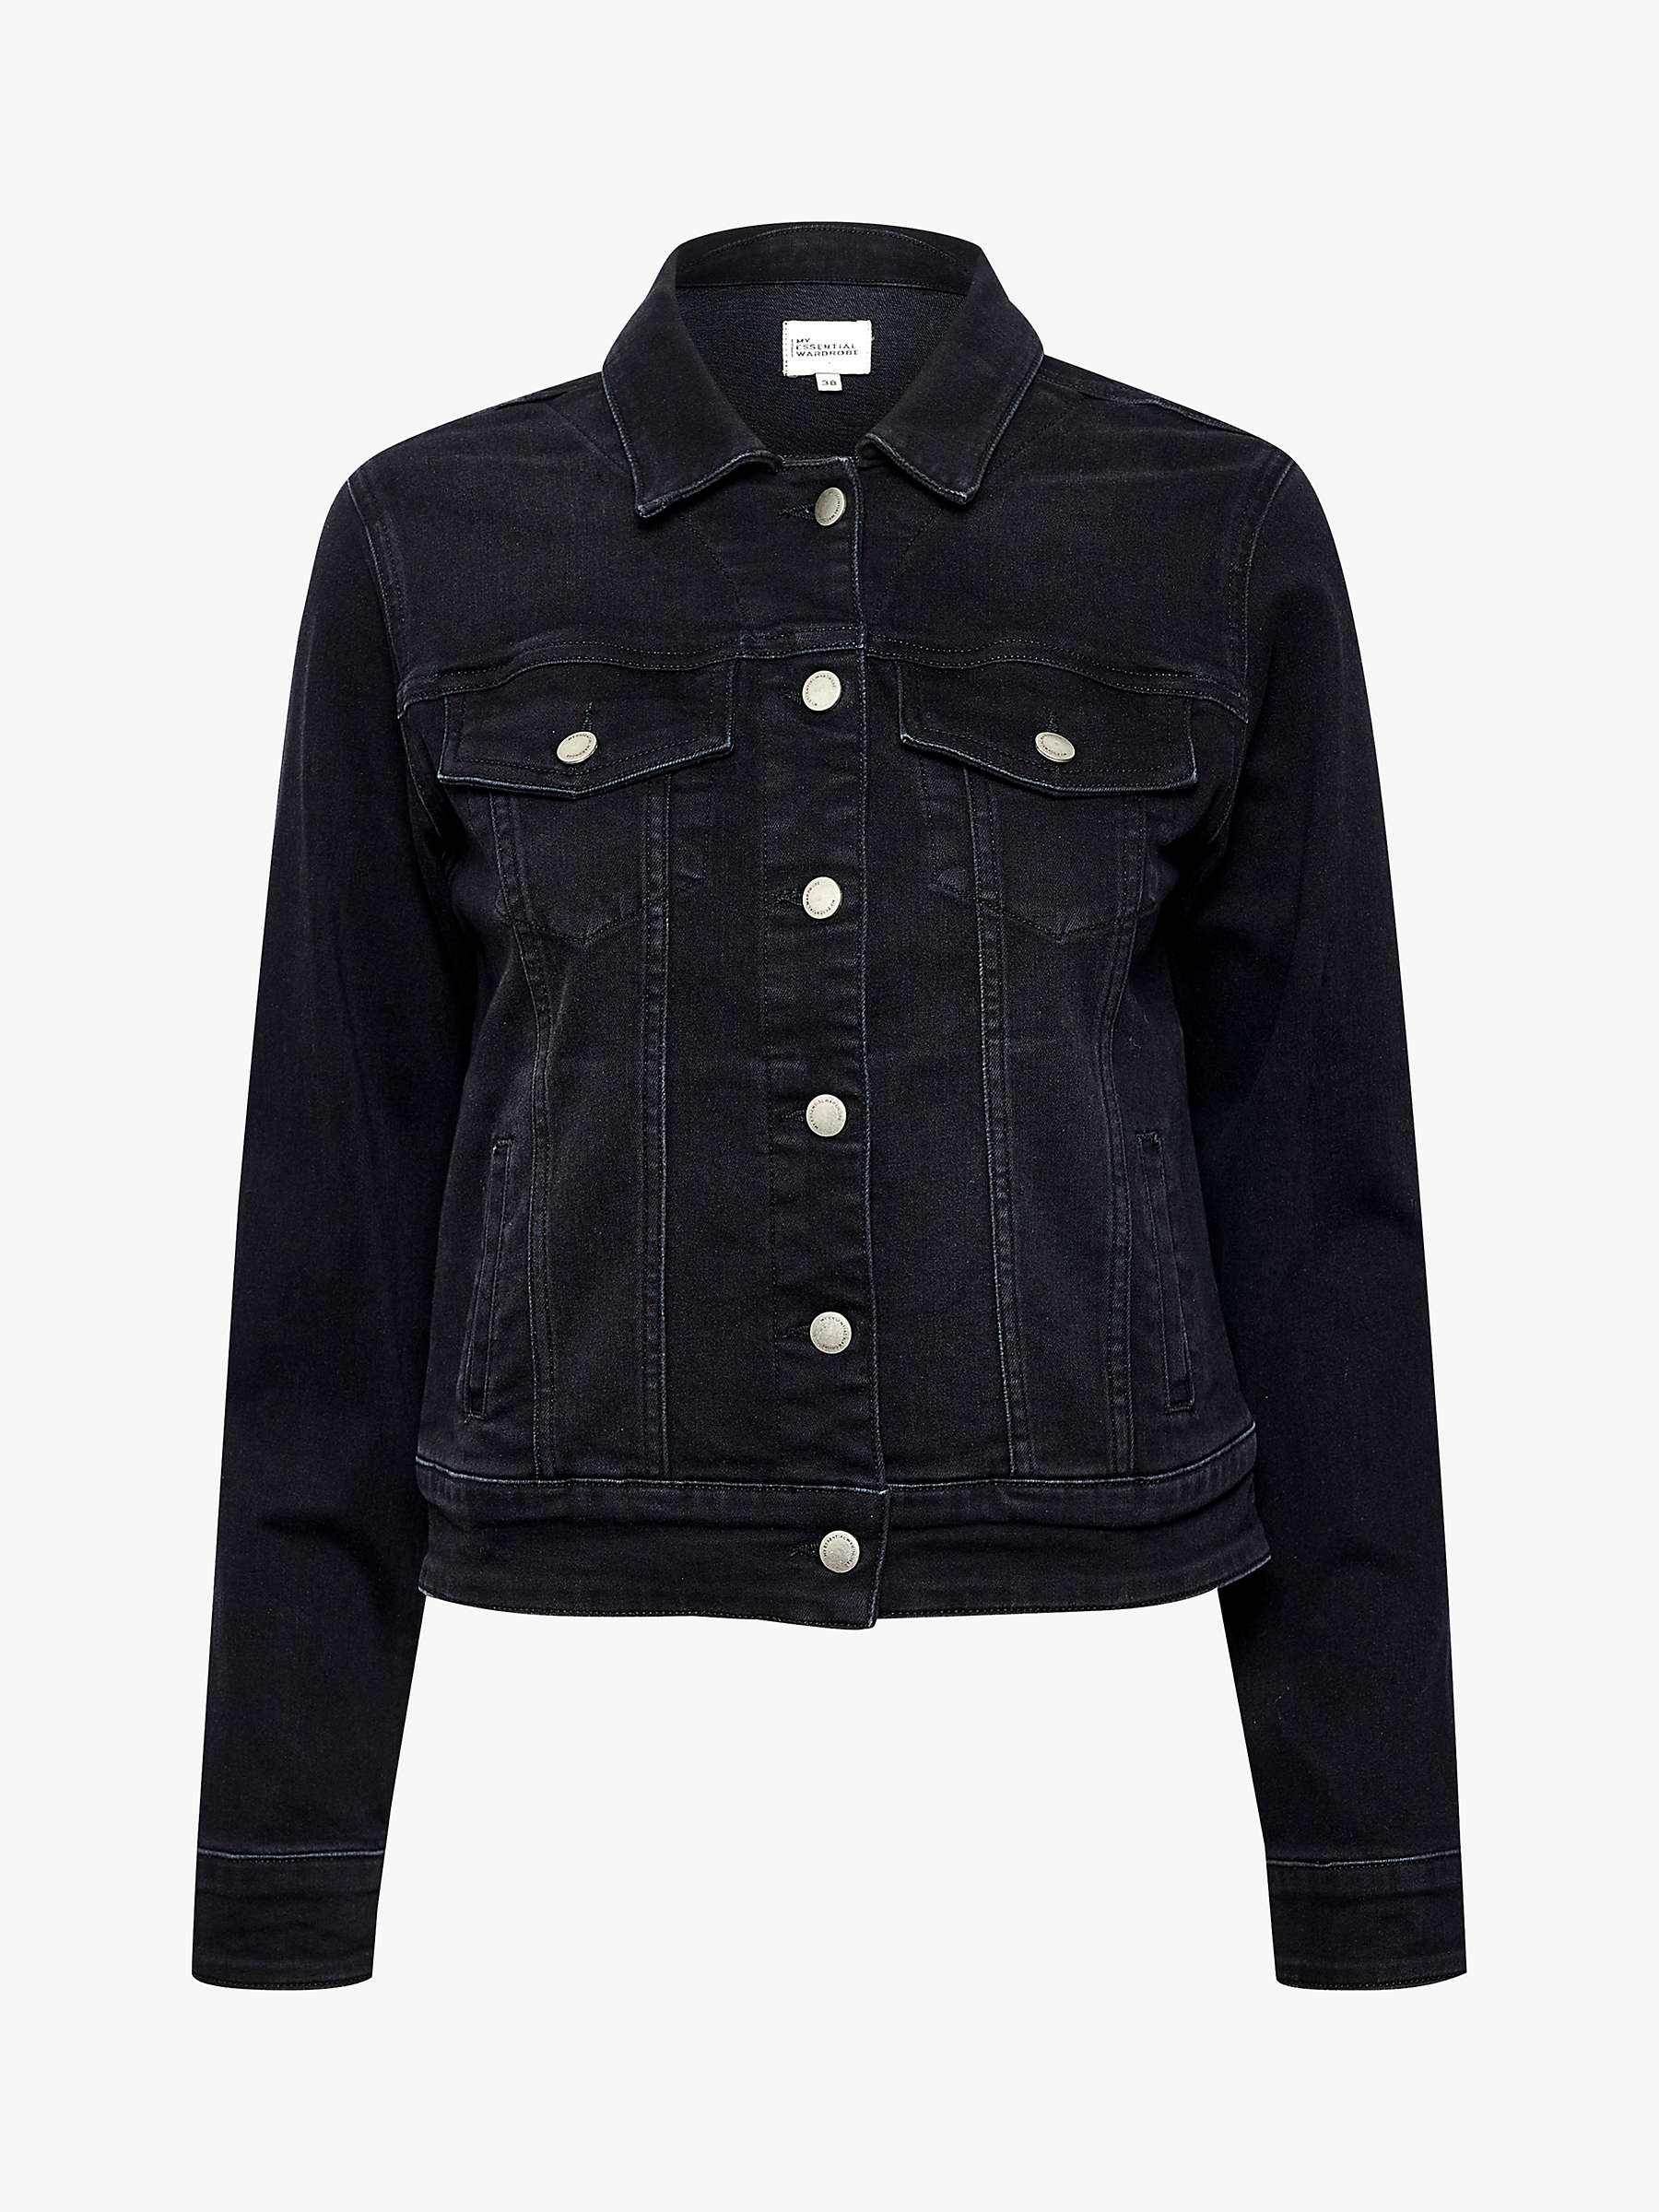 Buy MY ESSENTIAL WARDROBE Denim Jacket, Black Wash Online at johnlewis.com